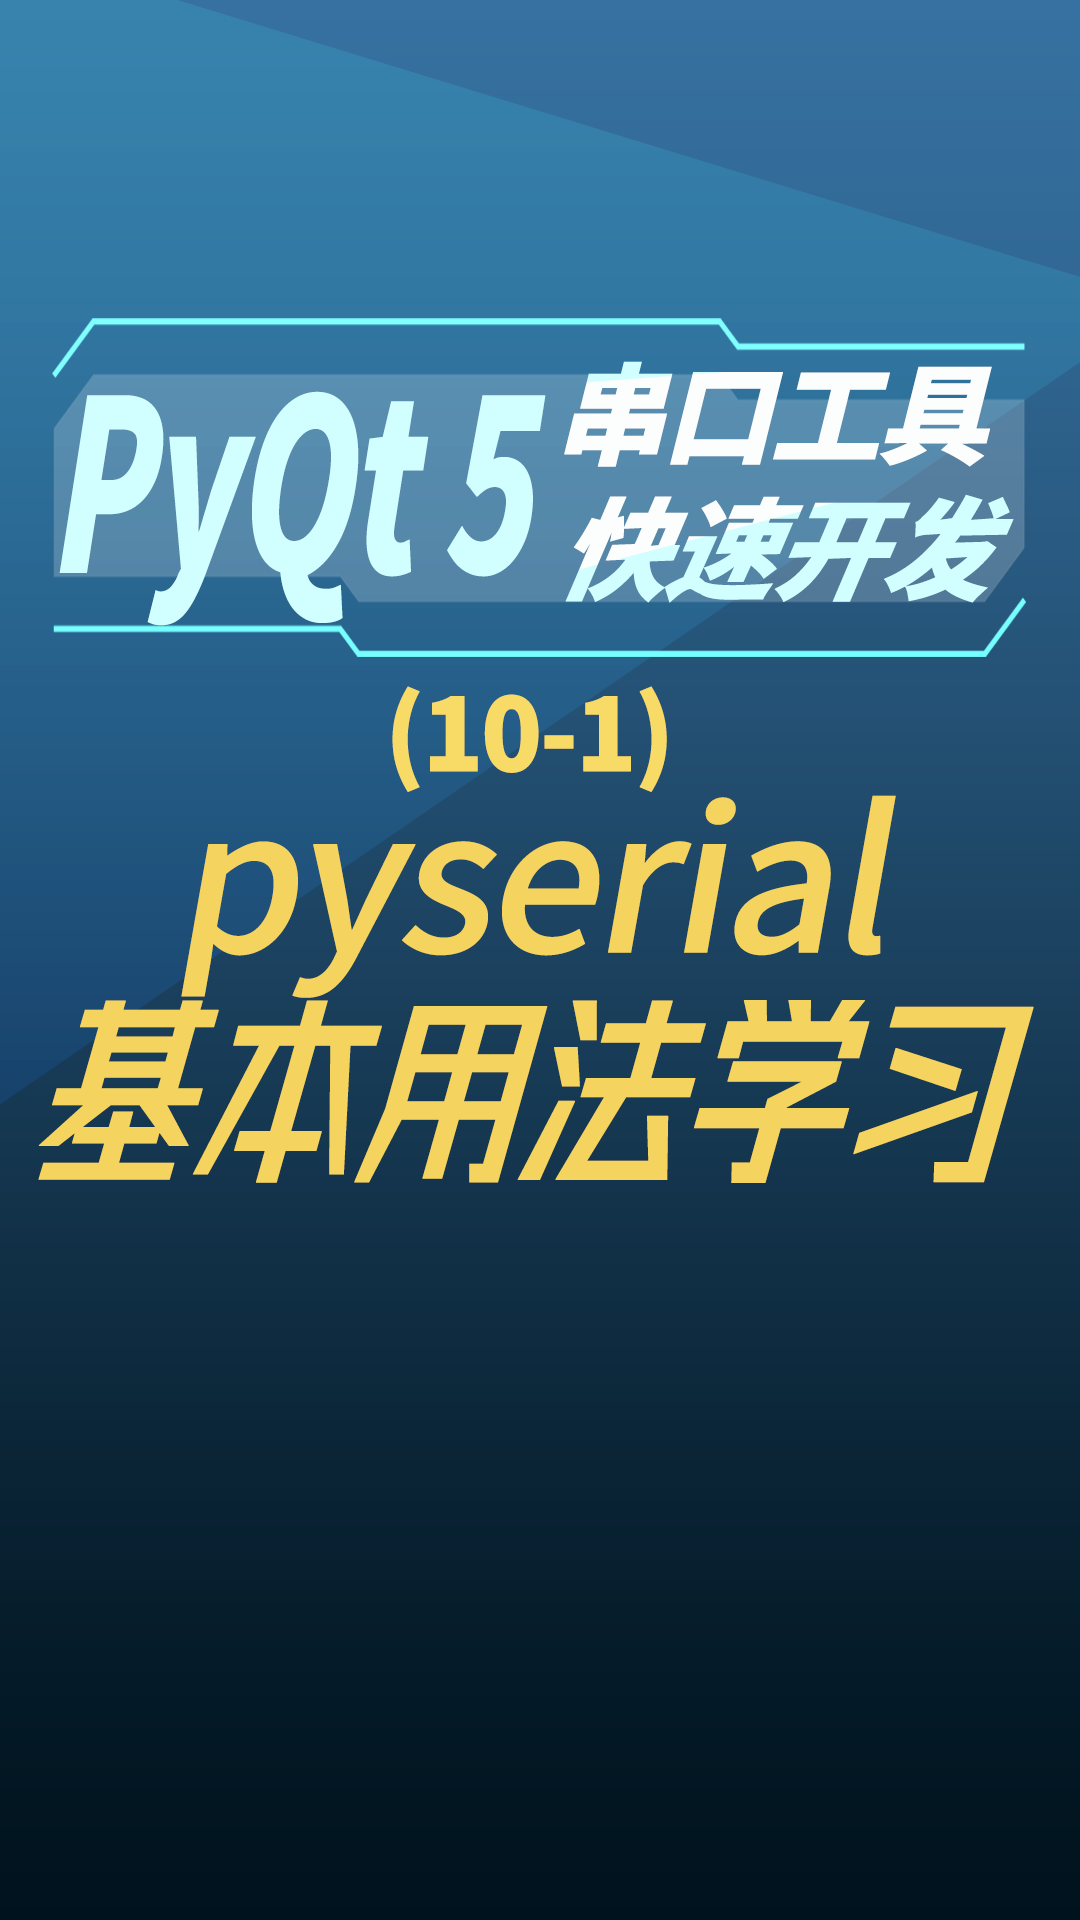 pyqt5串口工具快速开发10-1pyserial基本用法学习#串口工具开发 